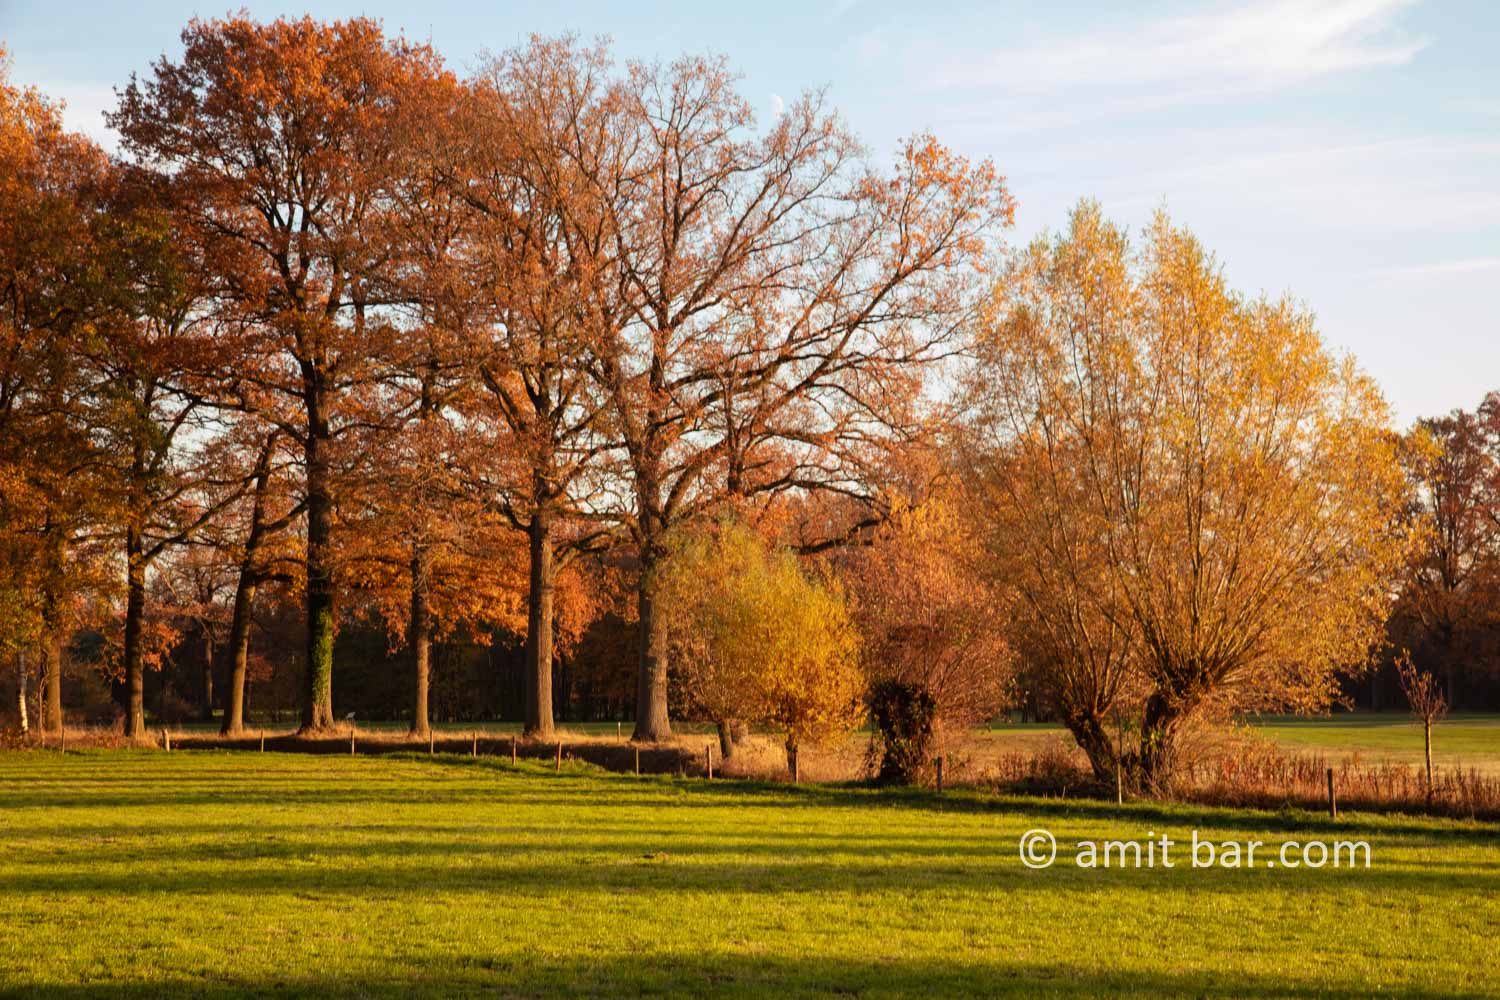 Autumn colors III: Autumn colors in the Achterhoek region, The Netherlands